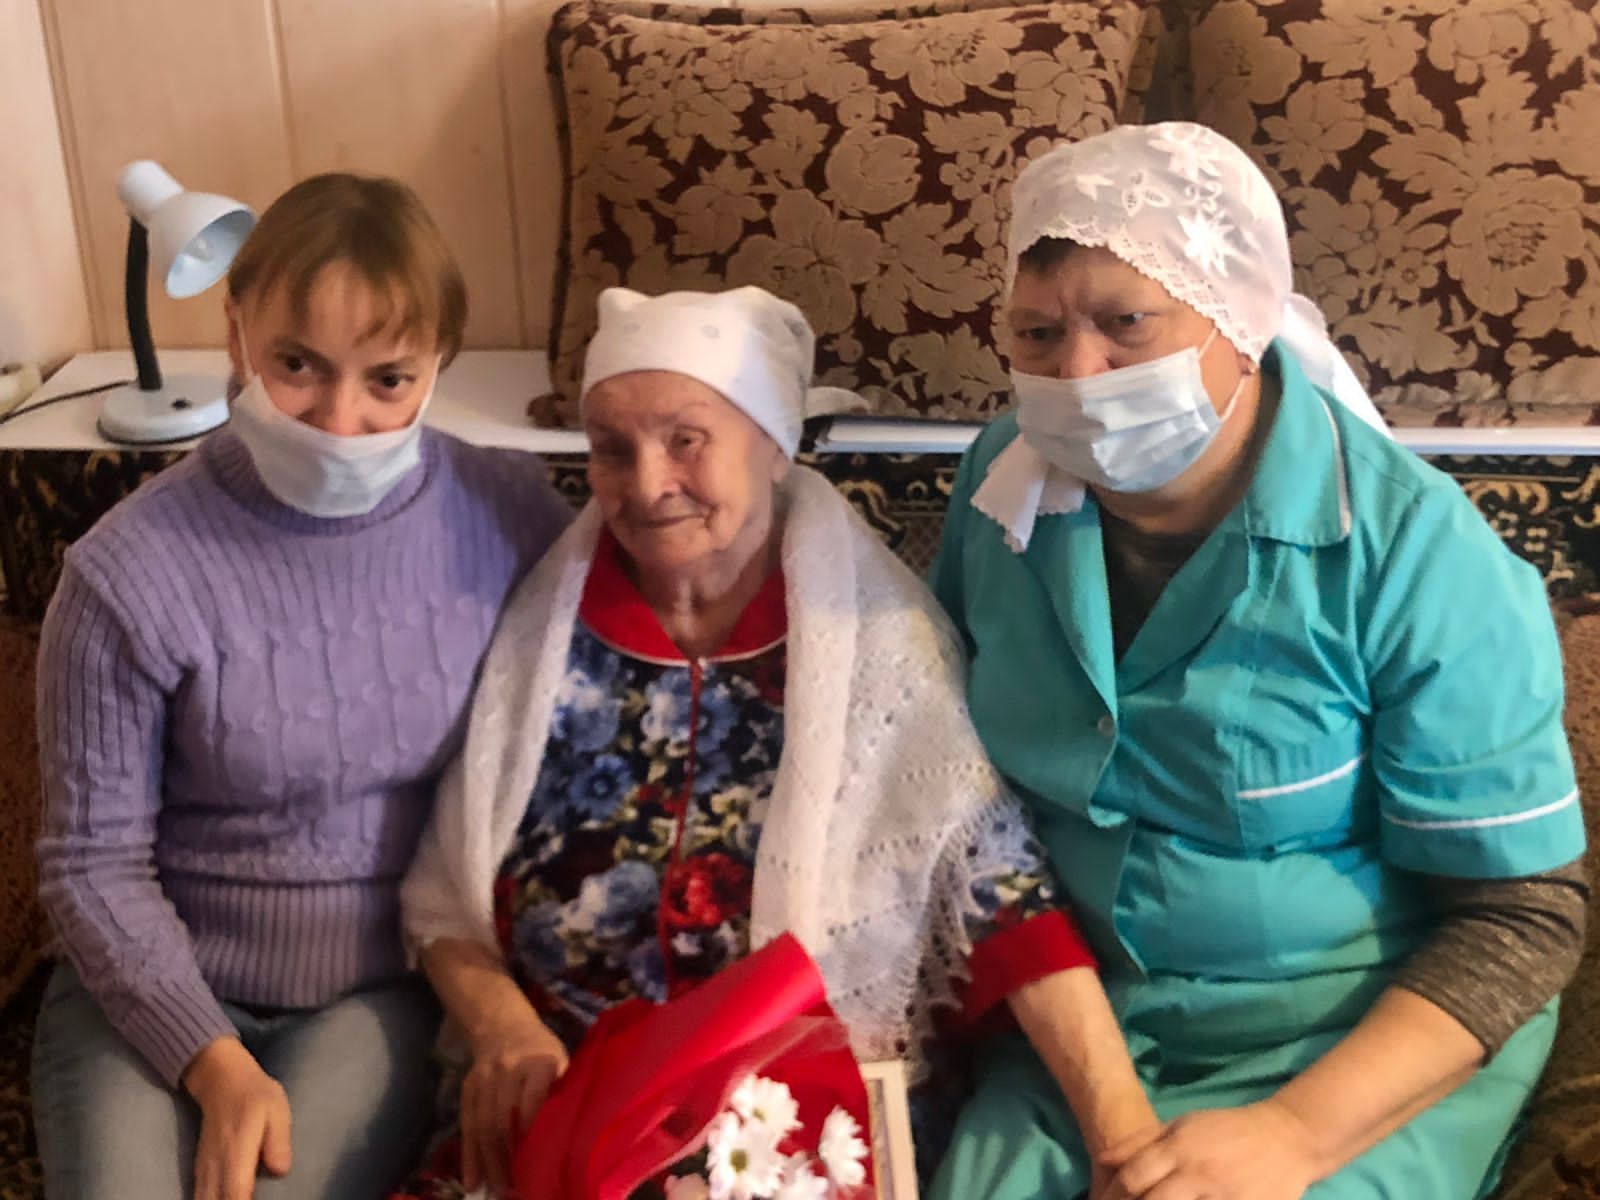 Жительница Ципьи Клара Галеева отметила 90-летний юбилей